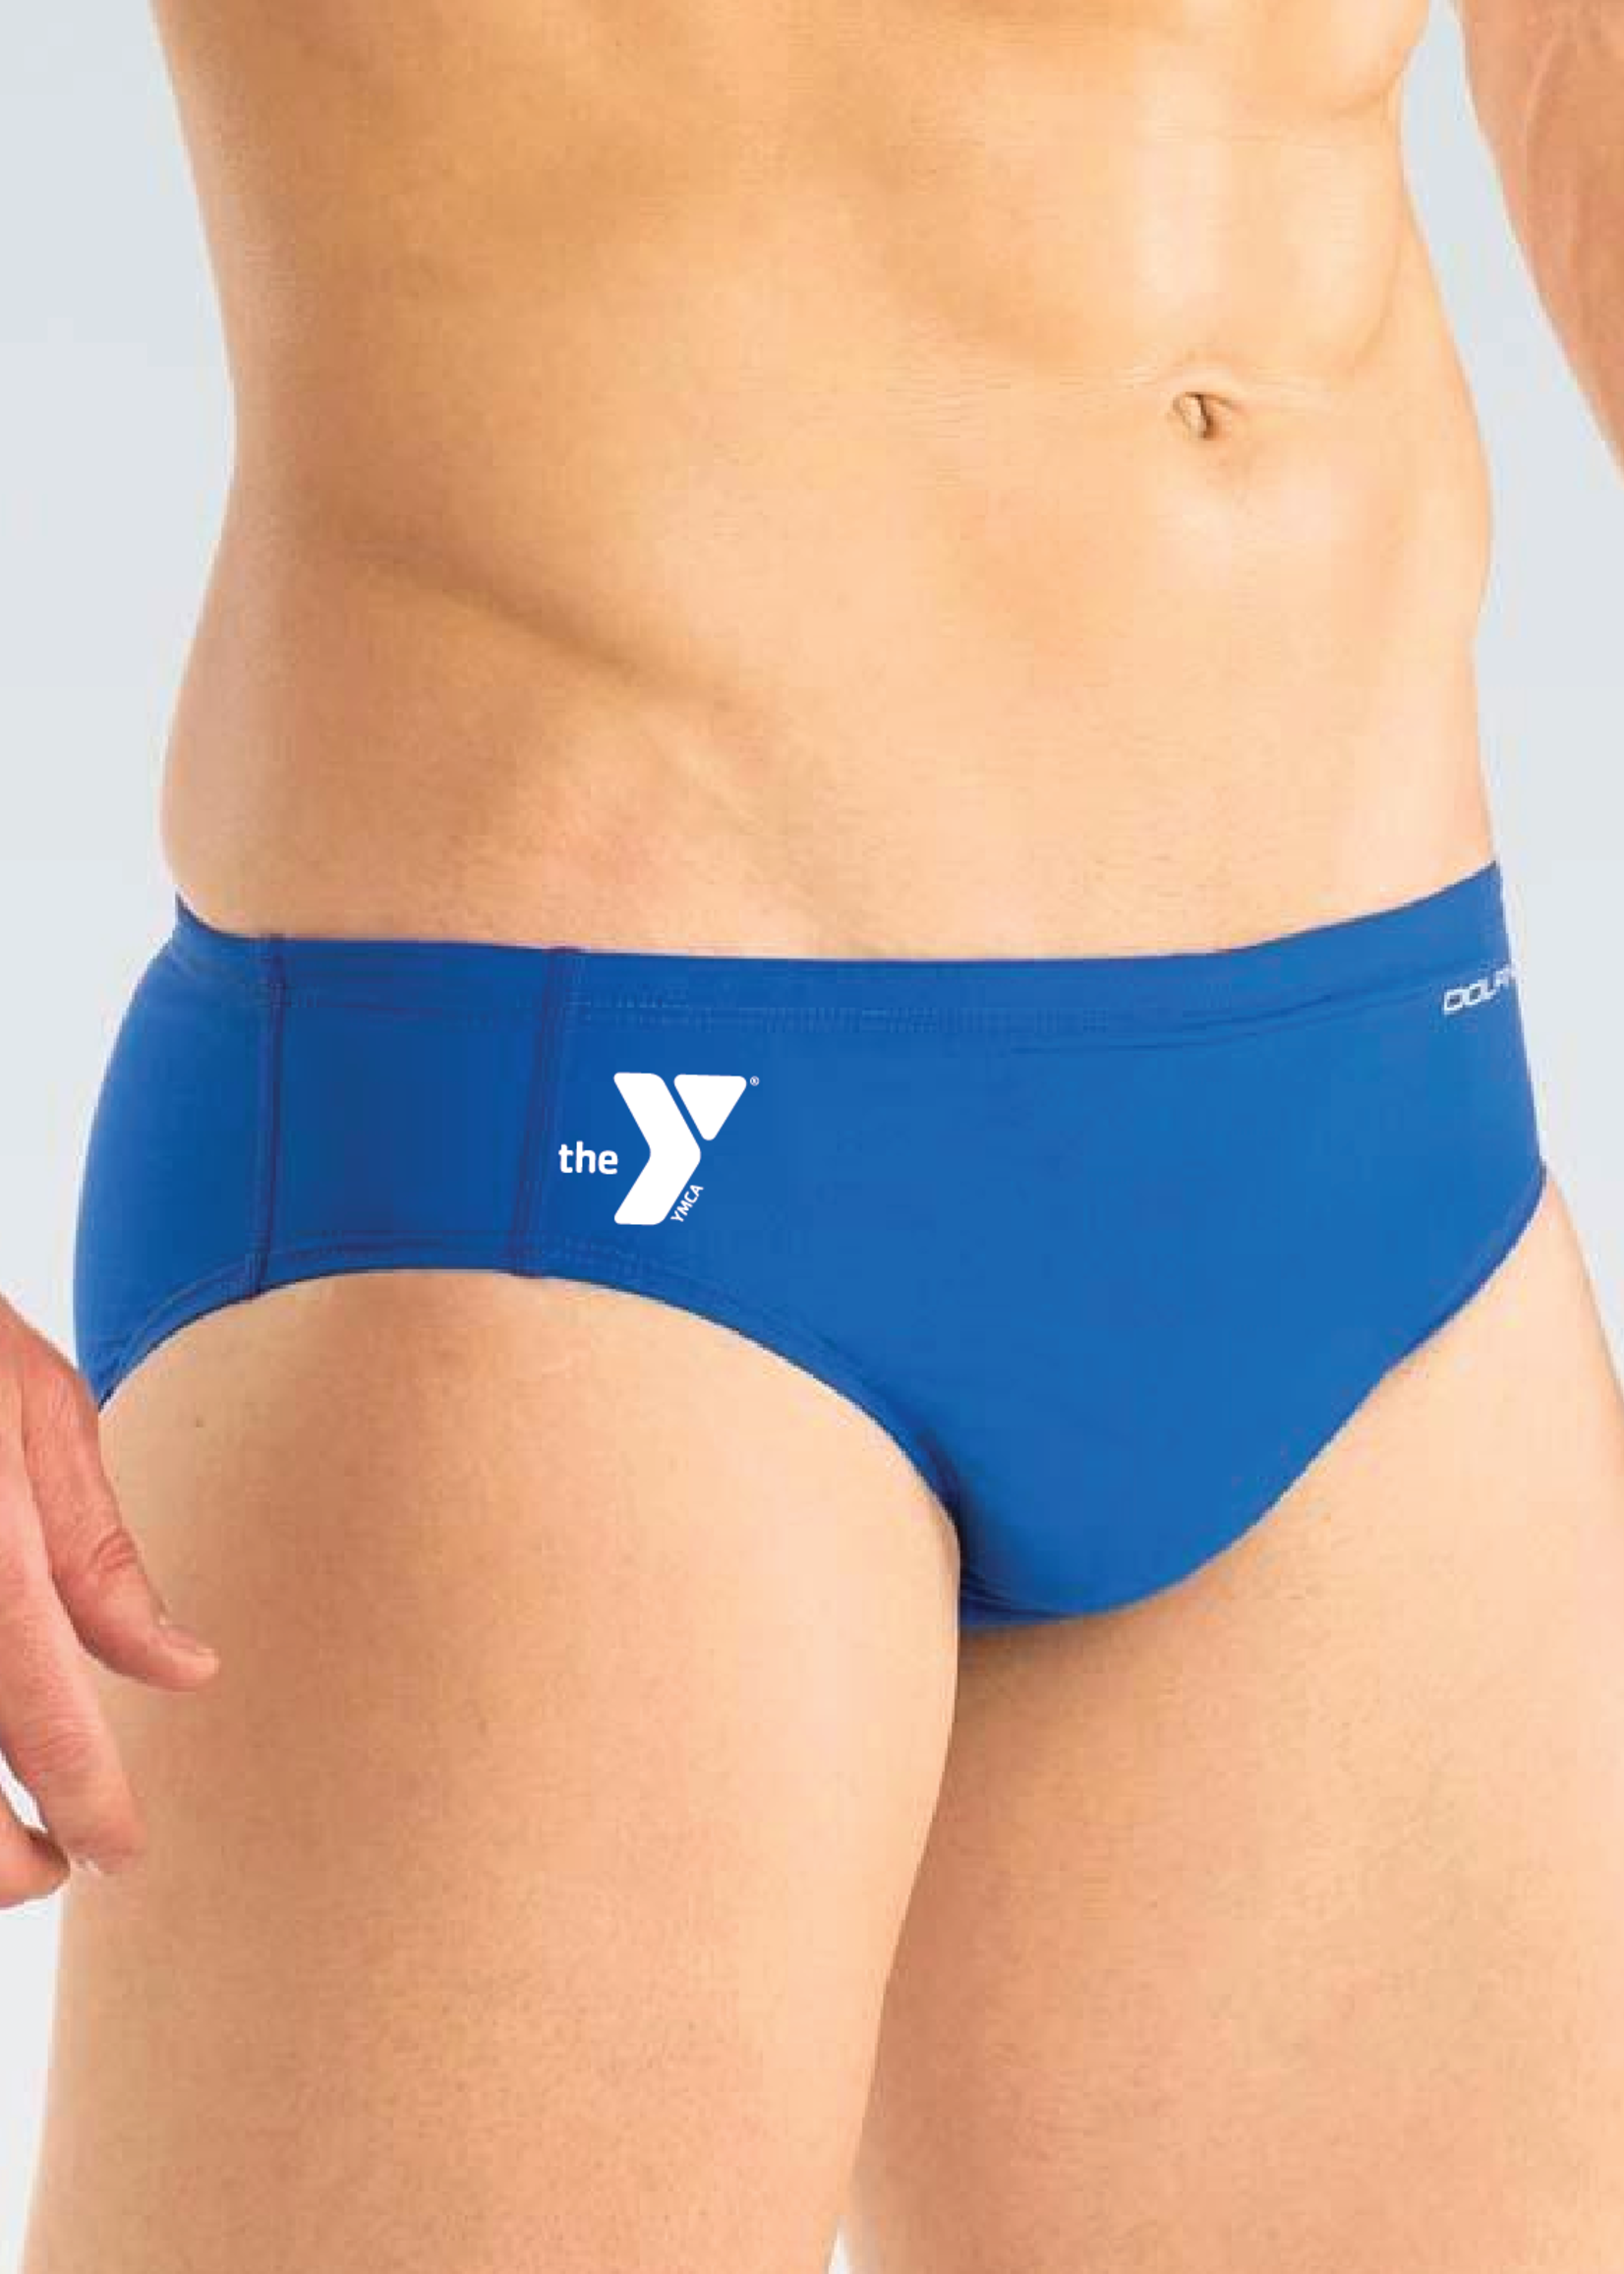 Hilliard Ray YMCA Suit Logo